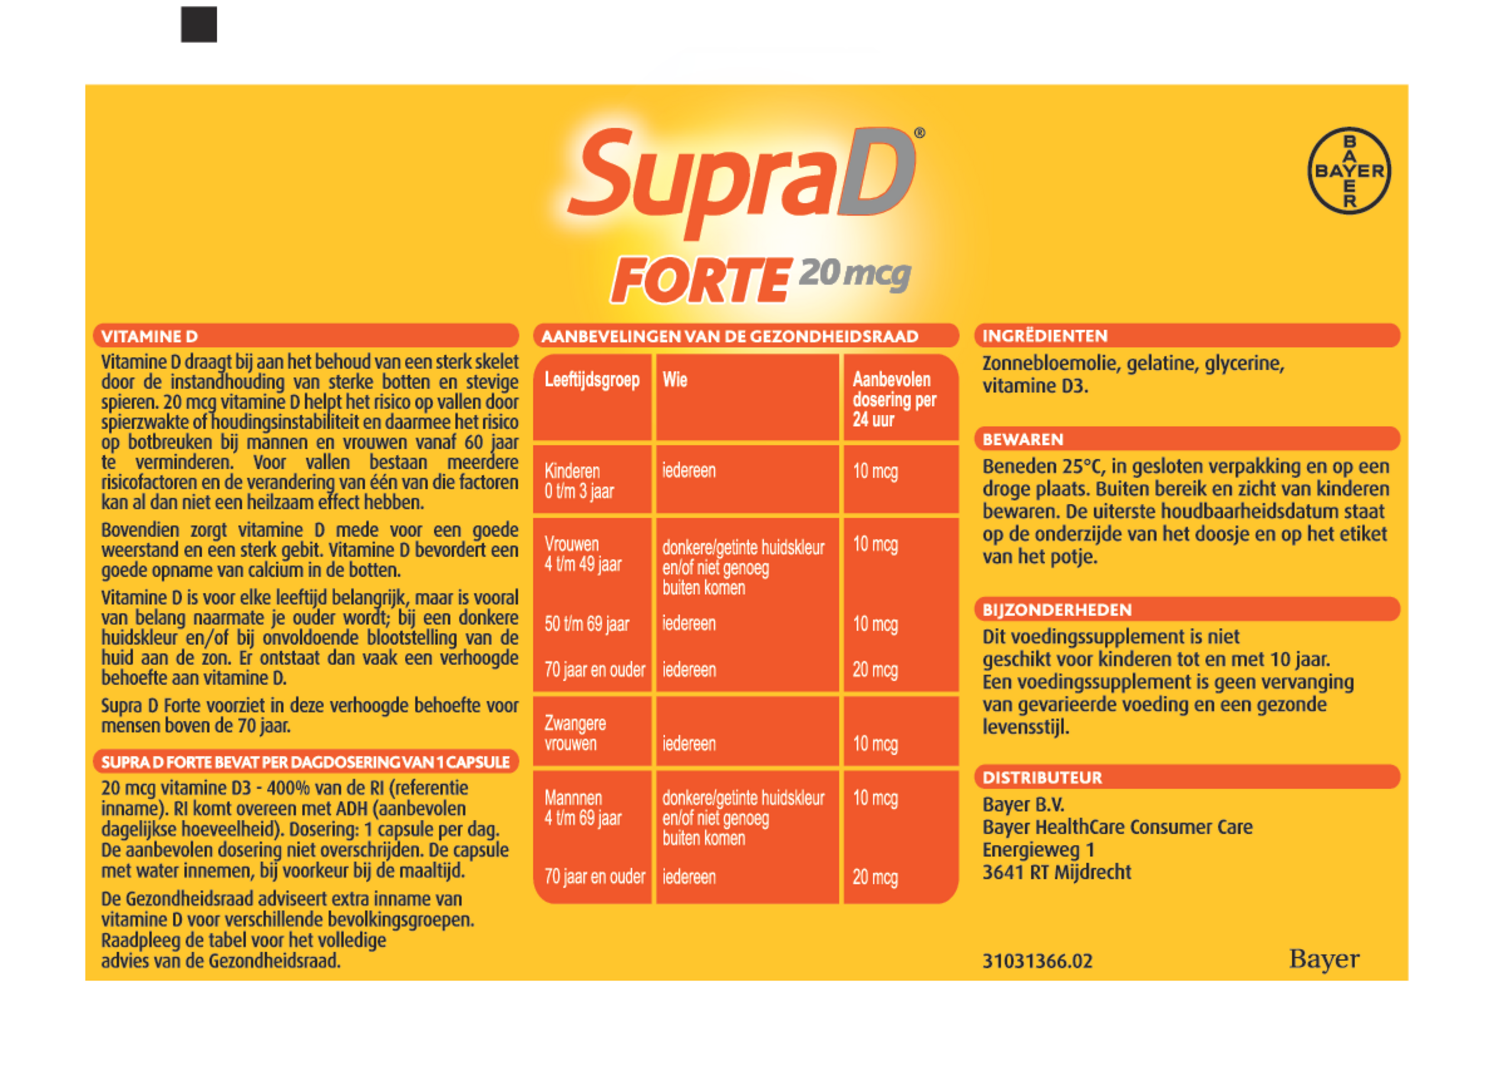 SupraD Forte 20mcg Parelcapsules afbeelding van document #1, gebruiksaanwijzing